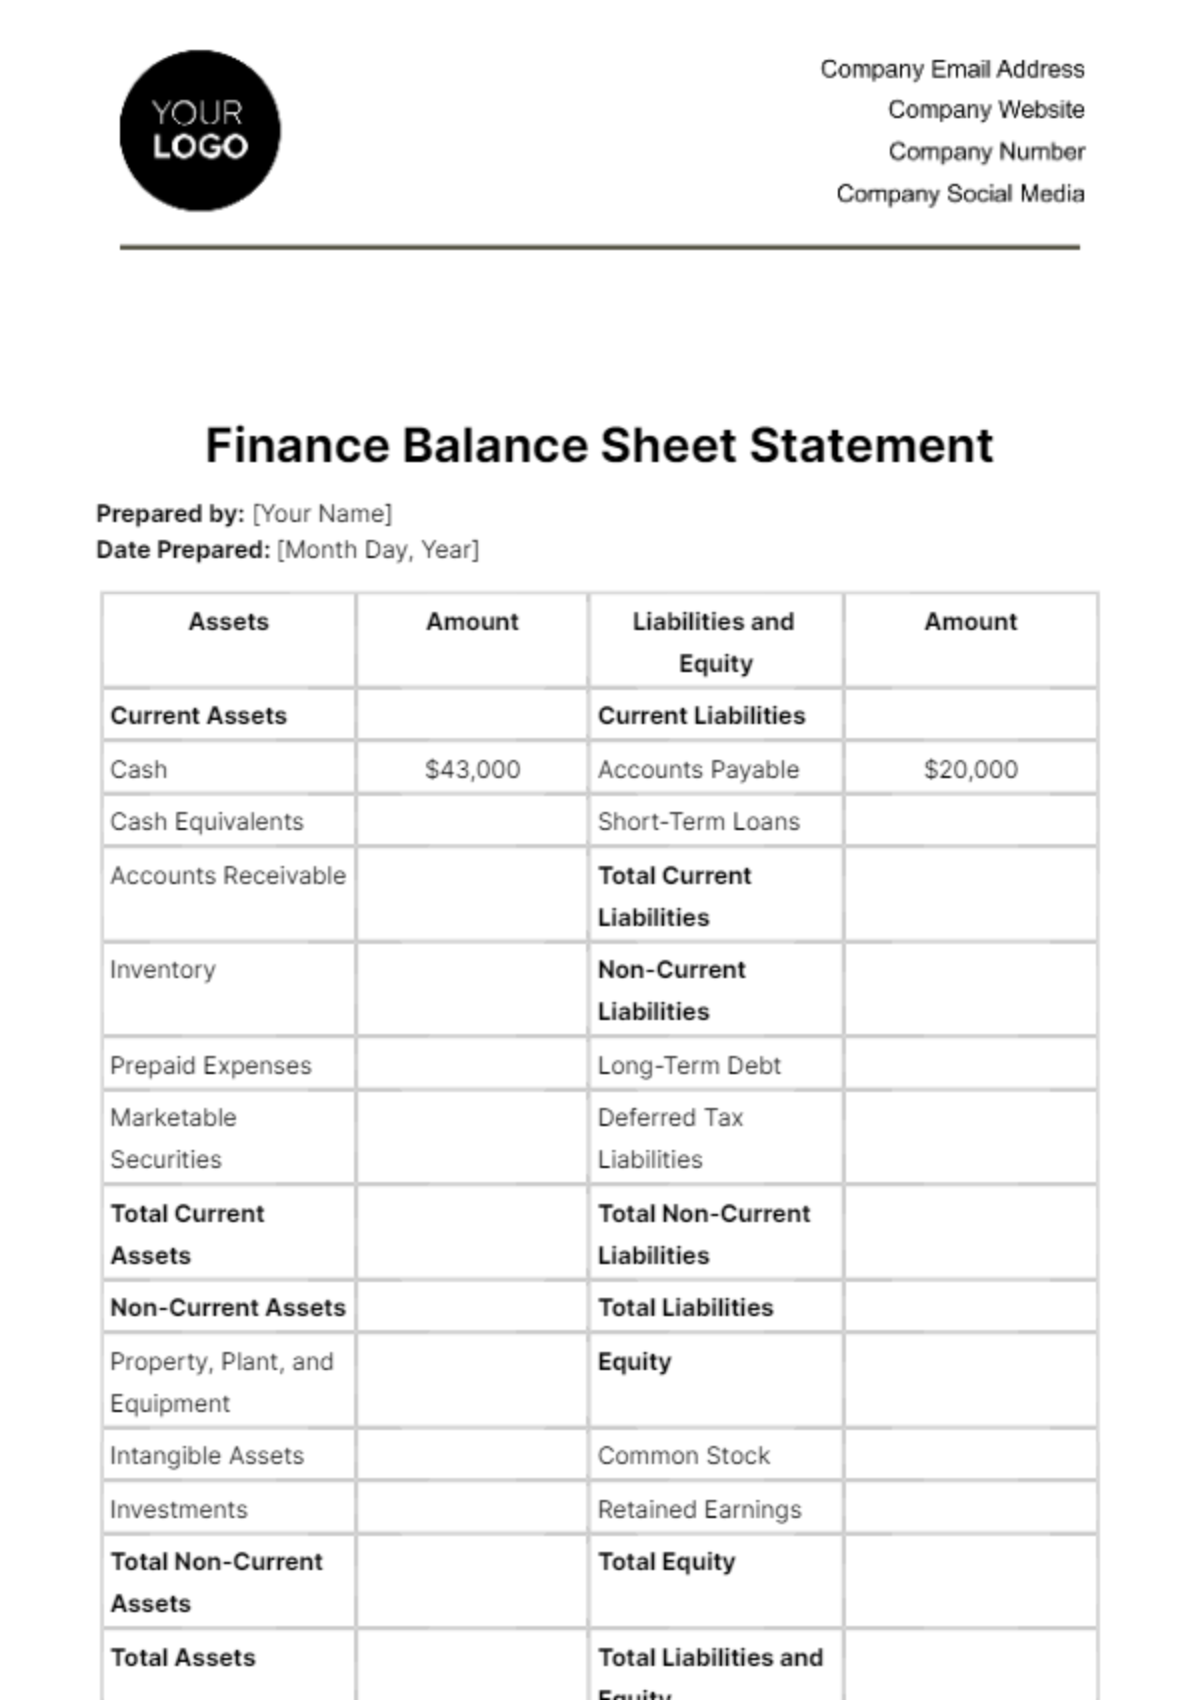 Finance Balance Sheet Statement Template